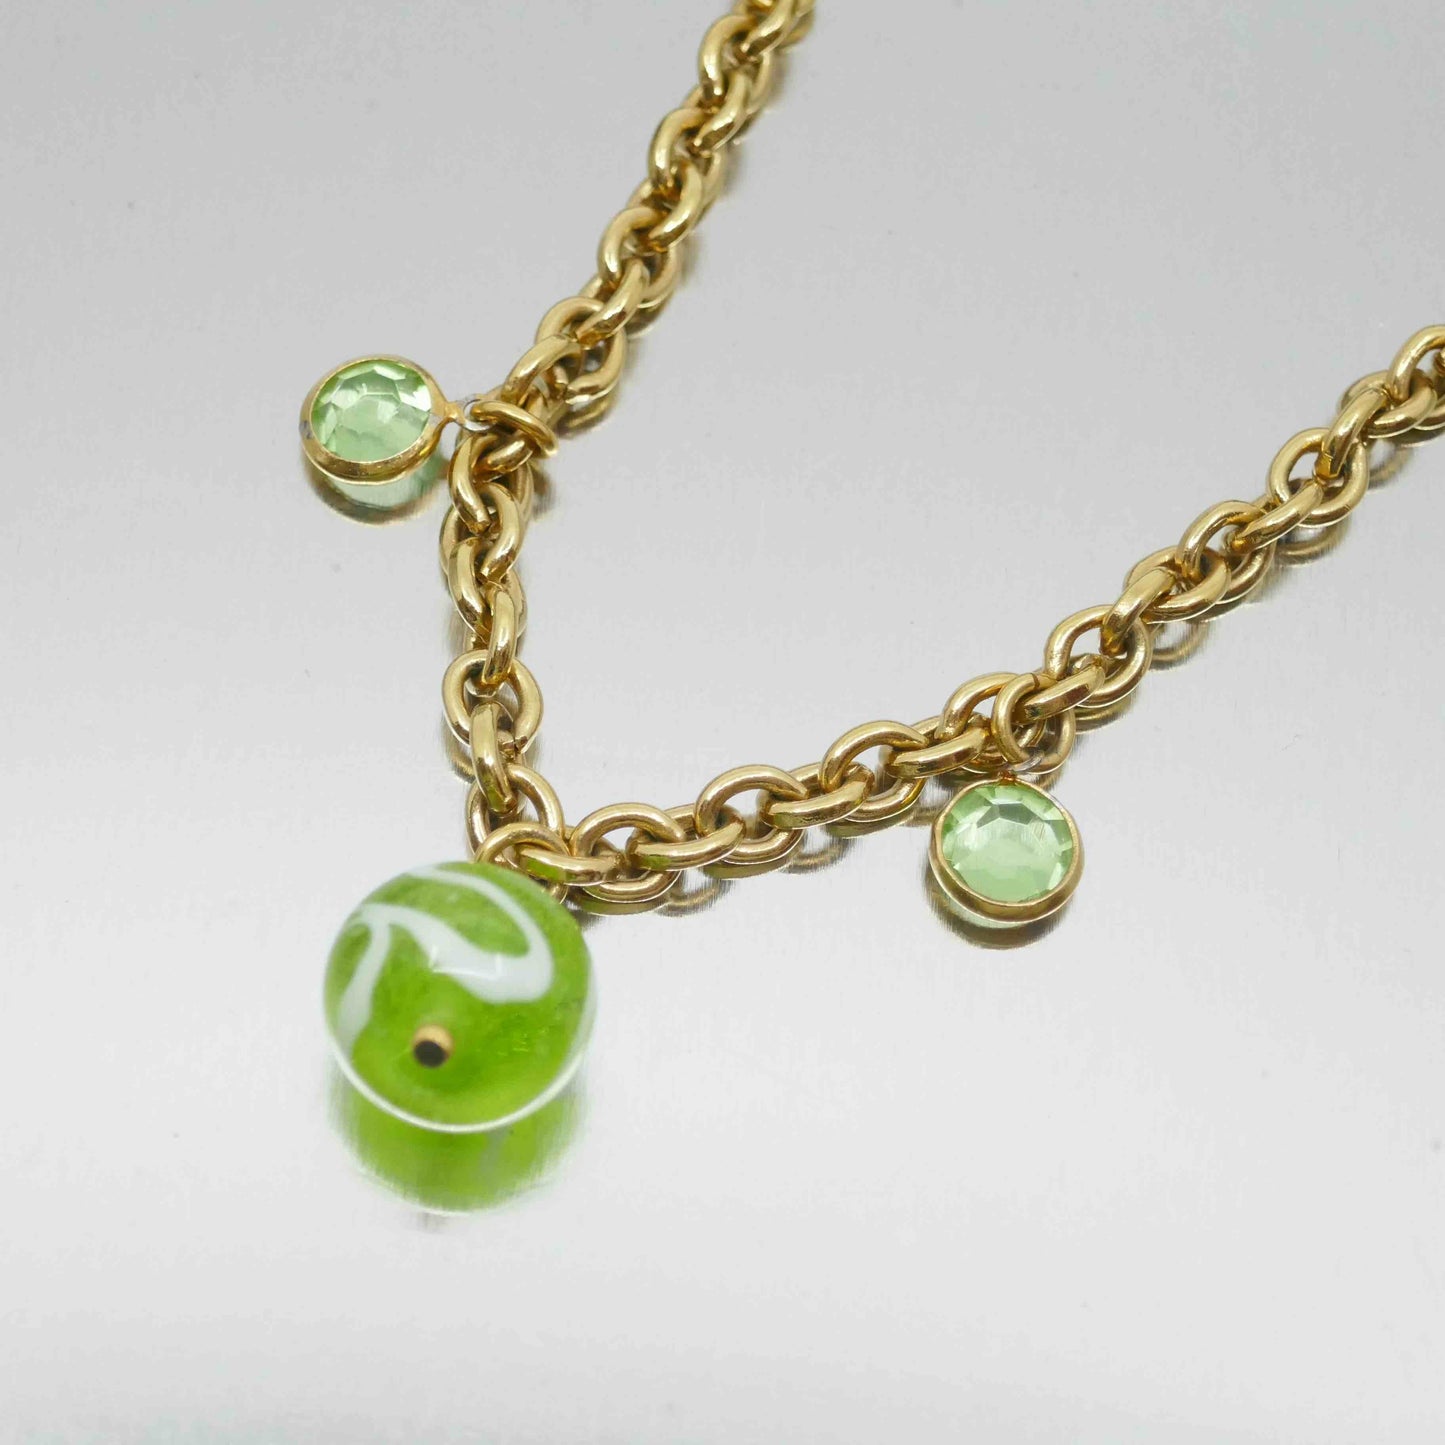 collier dore vent d ete-collier upcycle chaine vintage doree agatha pendentifs vert perles vertes zoom-atelierlabonneaventure